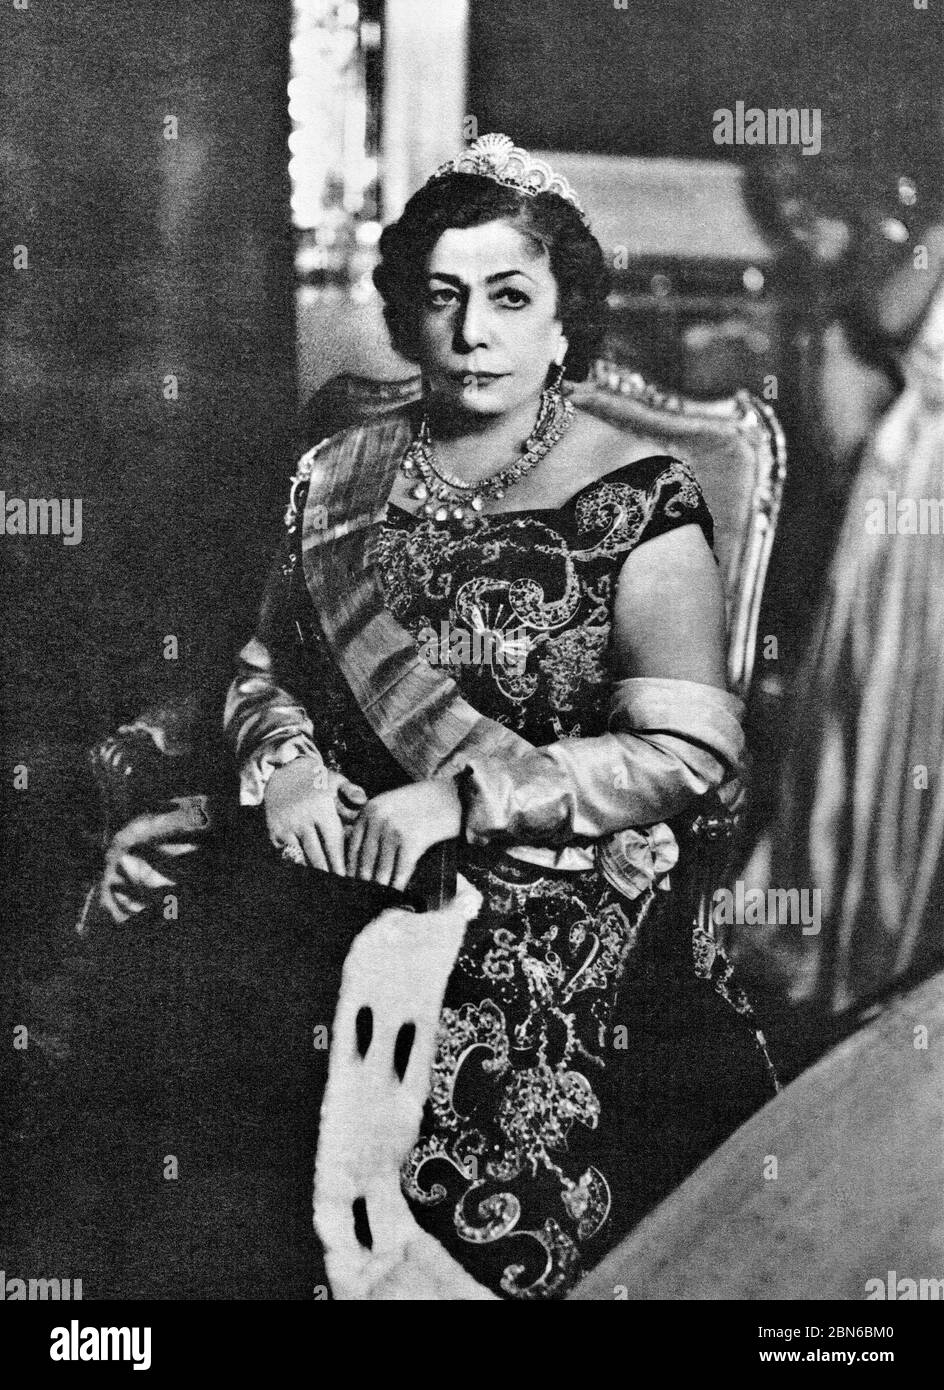 Iran: Tadj ol-Molouk (1896 - 1982), Queen of Iran and married to Reza Shah Pahlavi (1878 - 1944), the Shah of Iran, c. 1930s.  Tadj ol-Molouk (born Ni Stock Photo